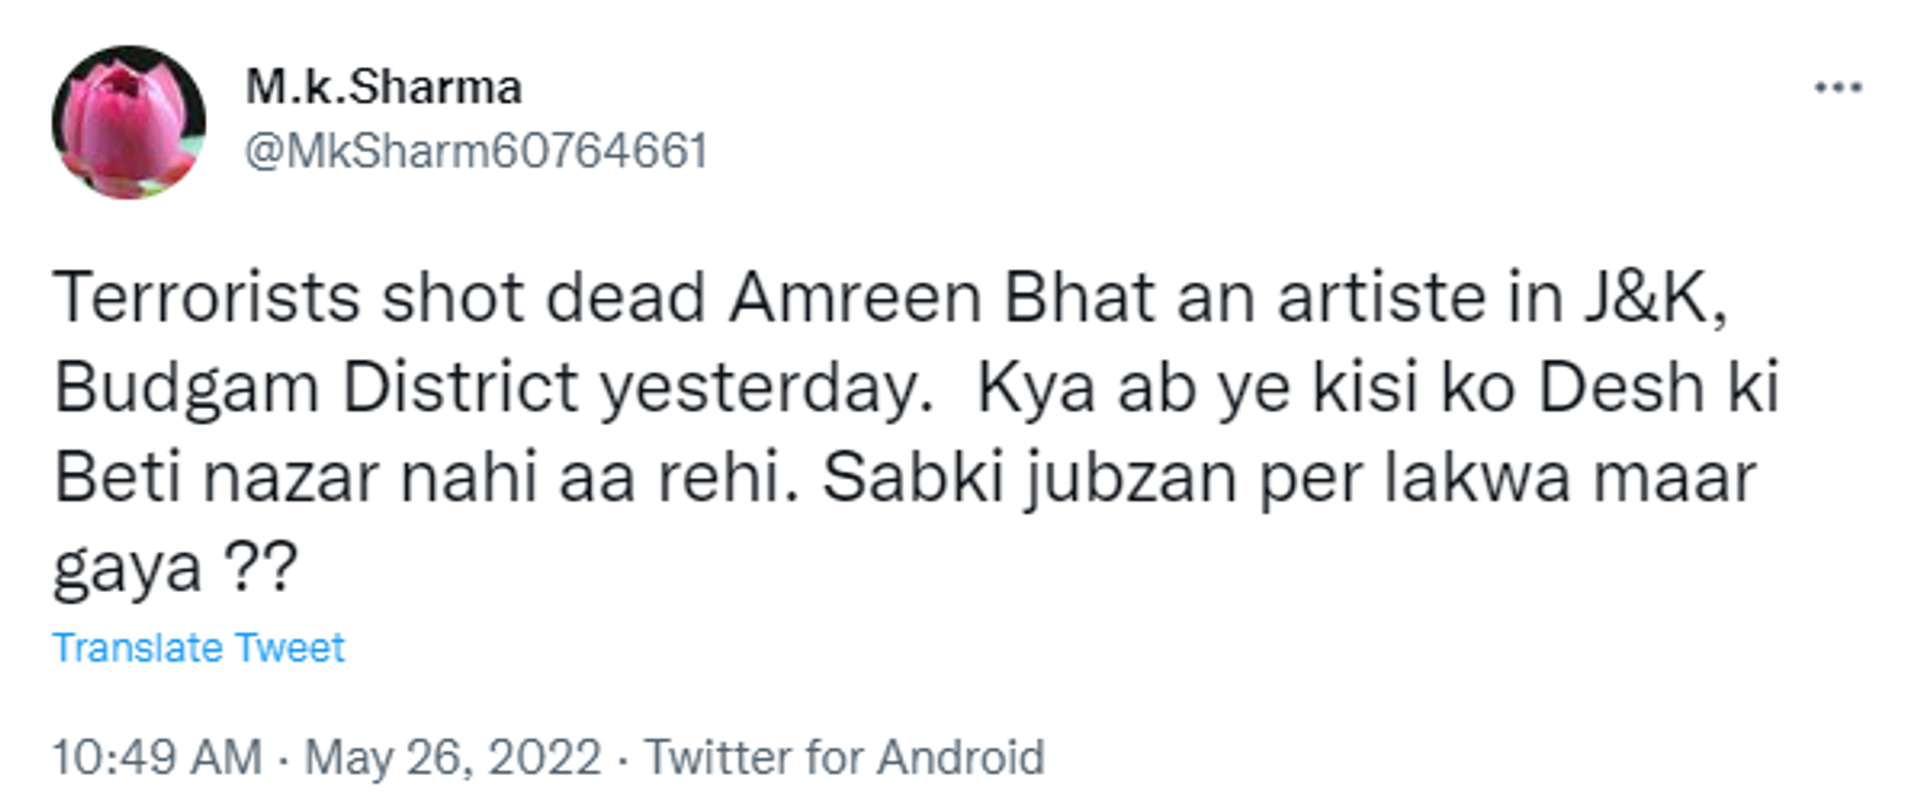 A Social Media User Mourns Killing of Amreen Bhat - Sputnik International, 1920, 26.05.2022